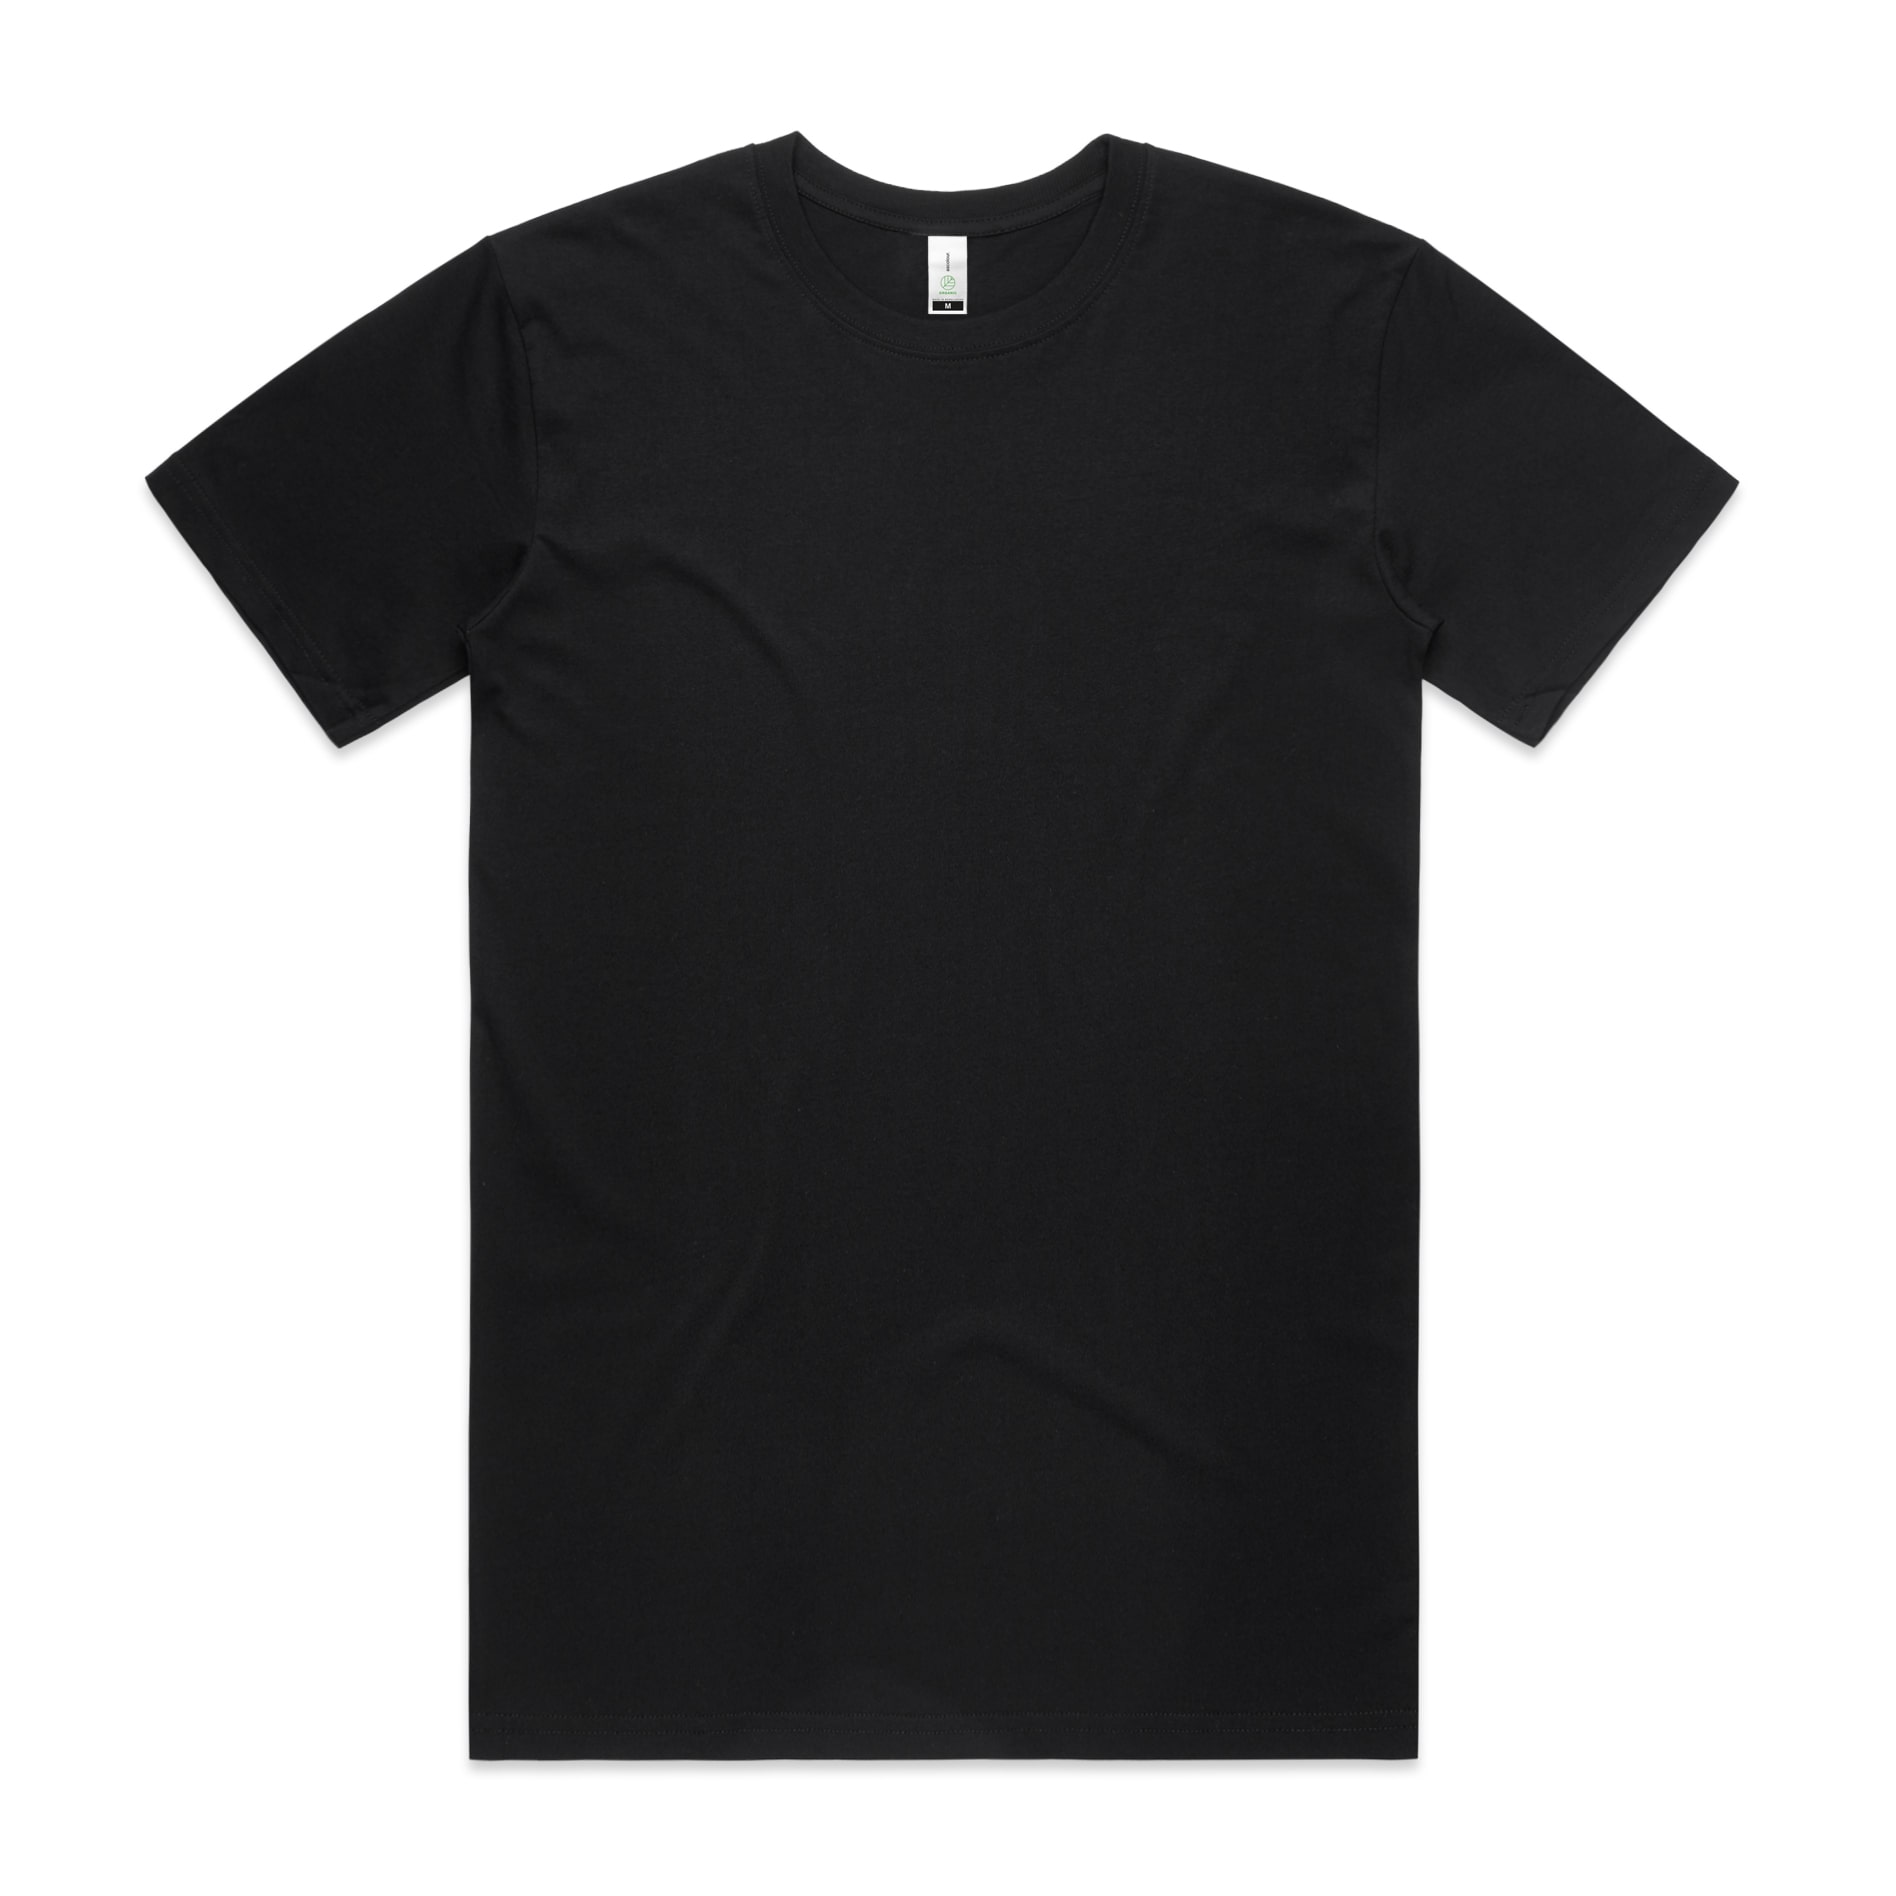 T shirt embroidery - 5001g staple organic tee black